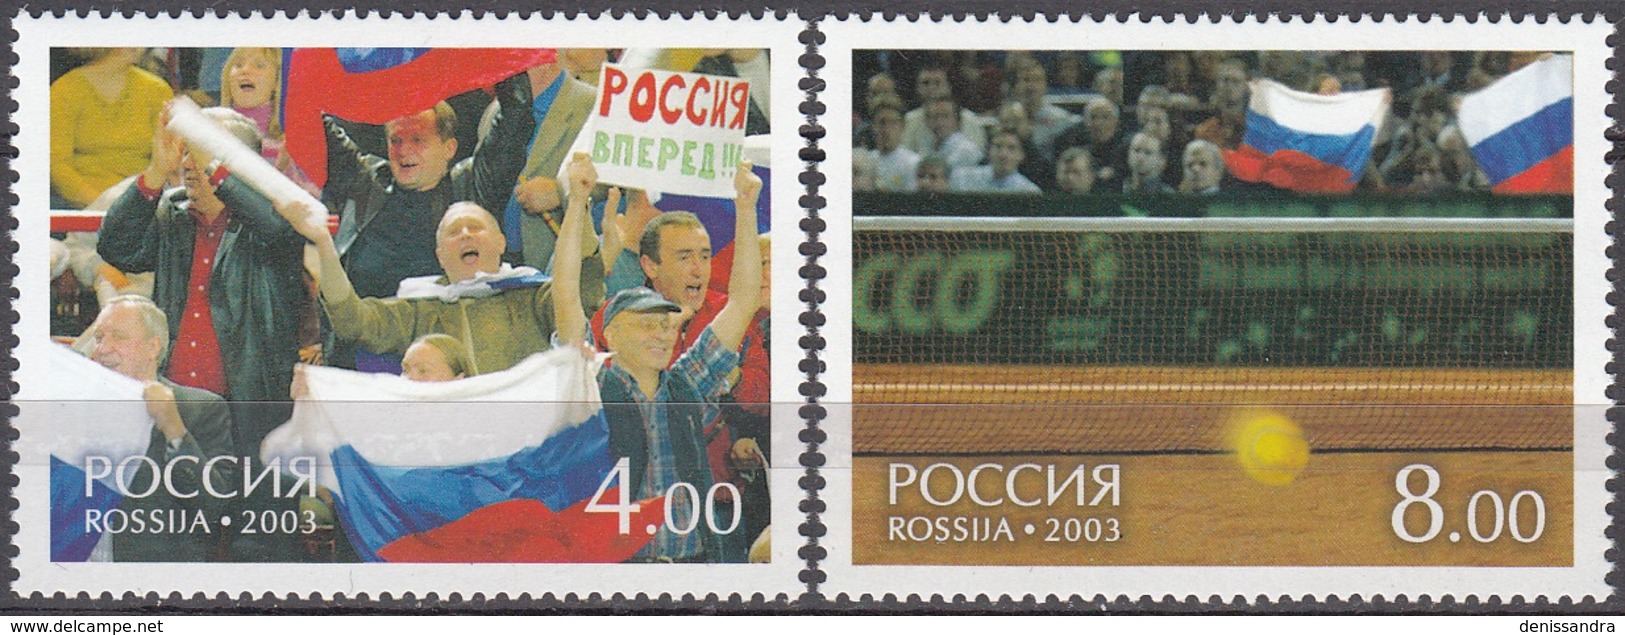 Rossija 2003 Michel 1061 - 1062 Neuf ** Cote (2008) 2.00 Euro Coupe Davis Tennis - Unused Stamps